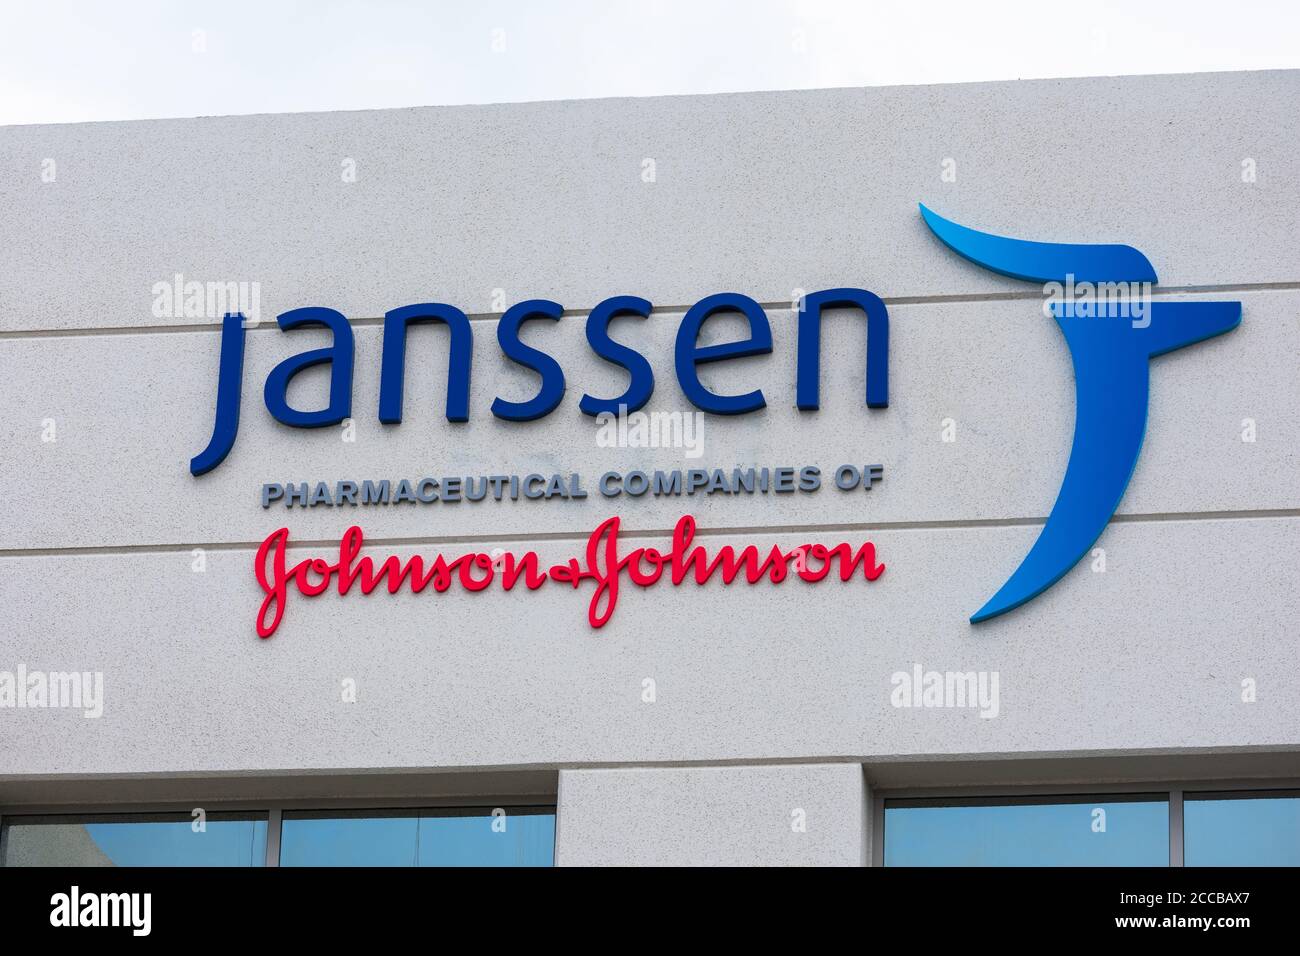 Janssen Pharmaceutica sign and logo. Janssen Pharmaceutica is a pharmaceutical company owned by Johnson and Johnson - South San Francisco, California, Stock Photo